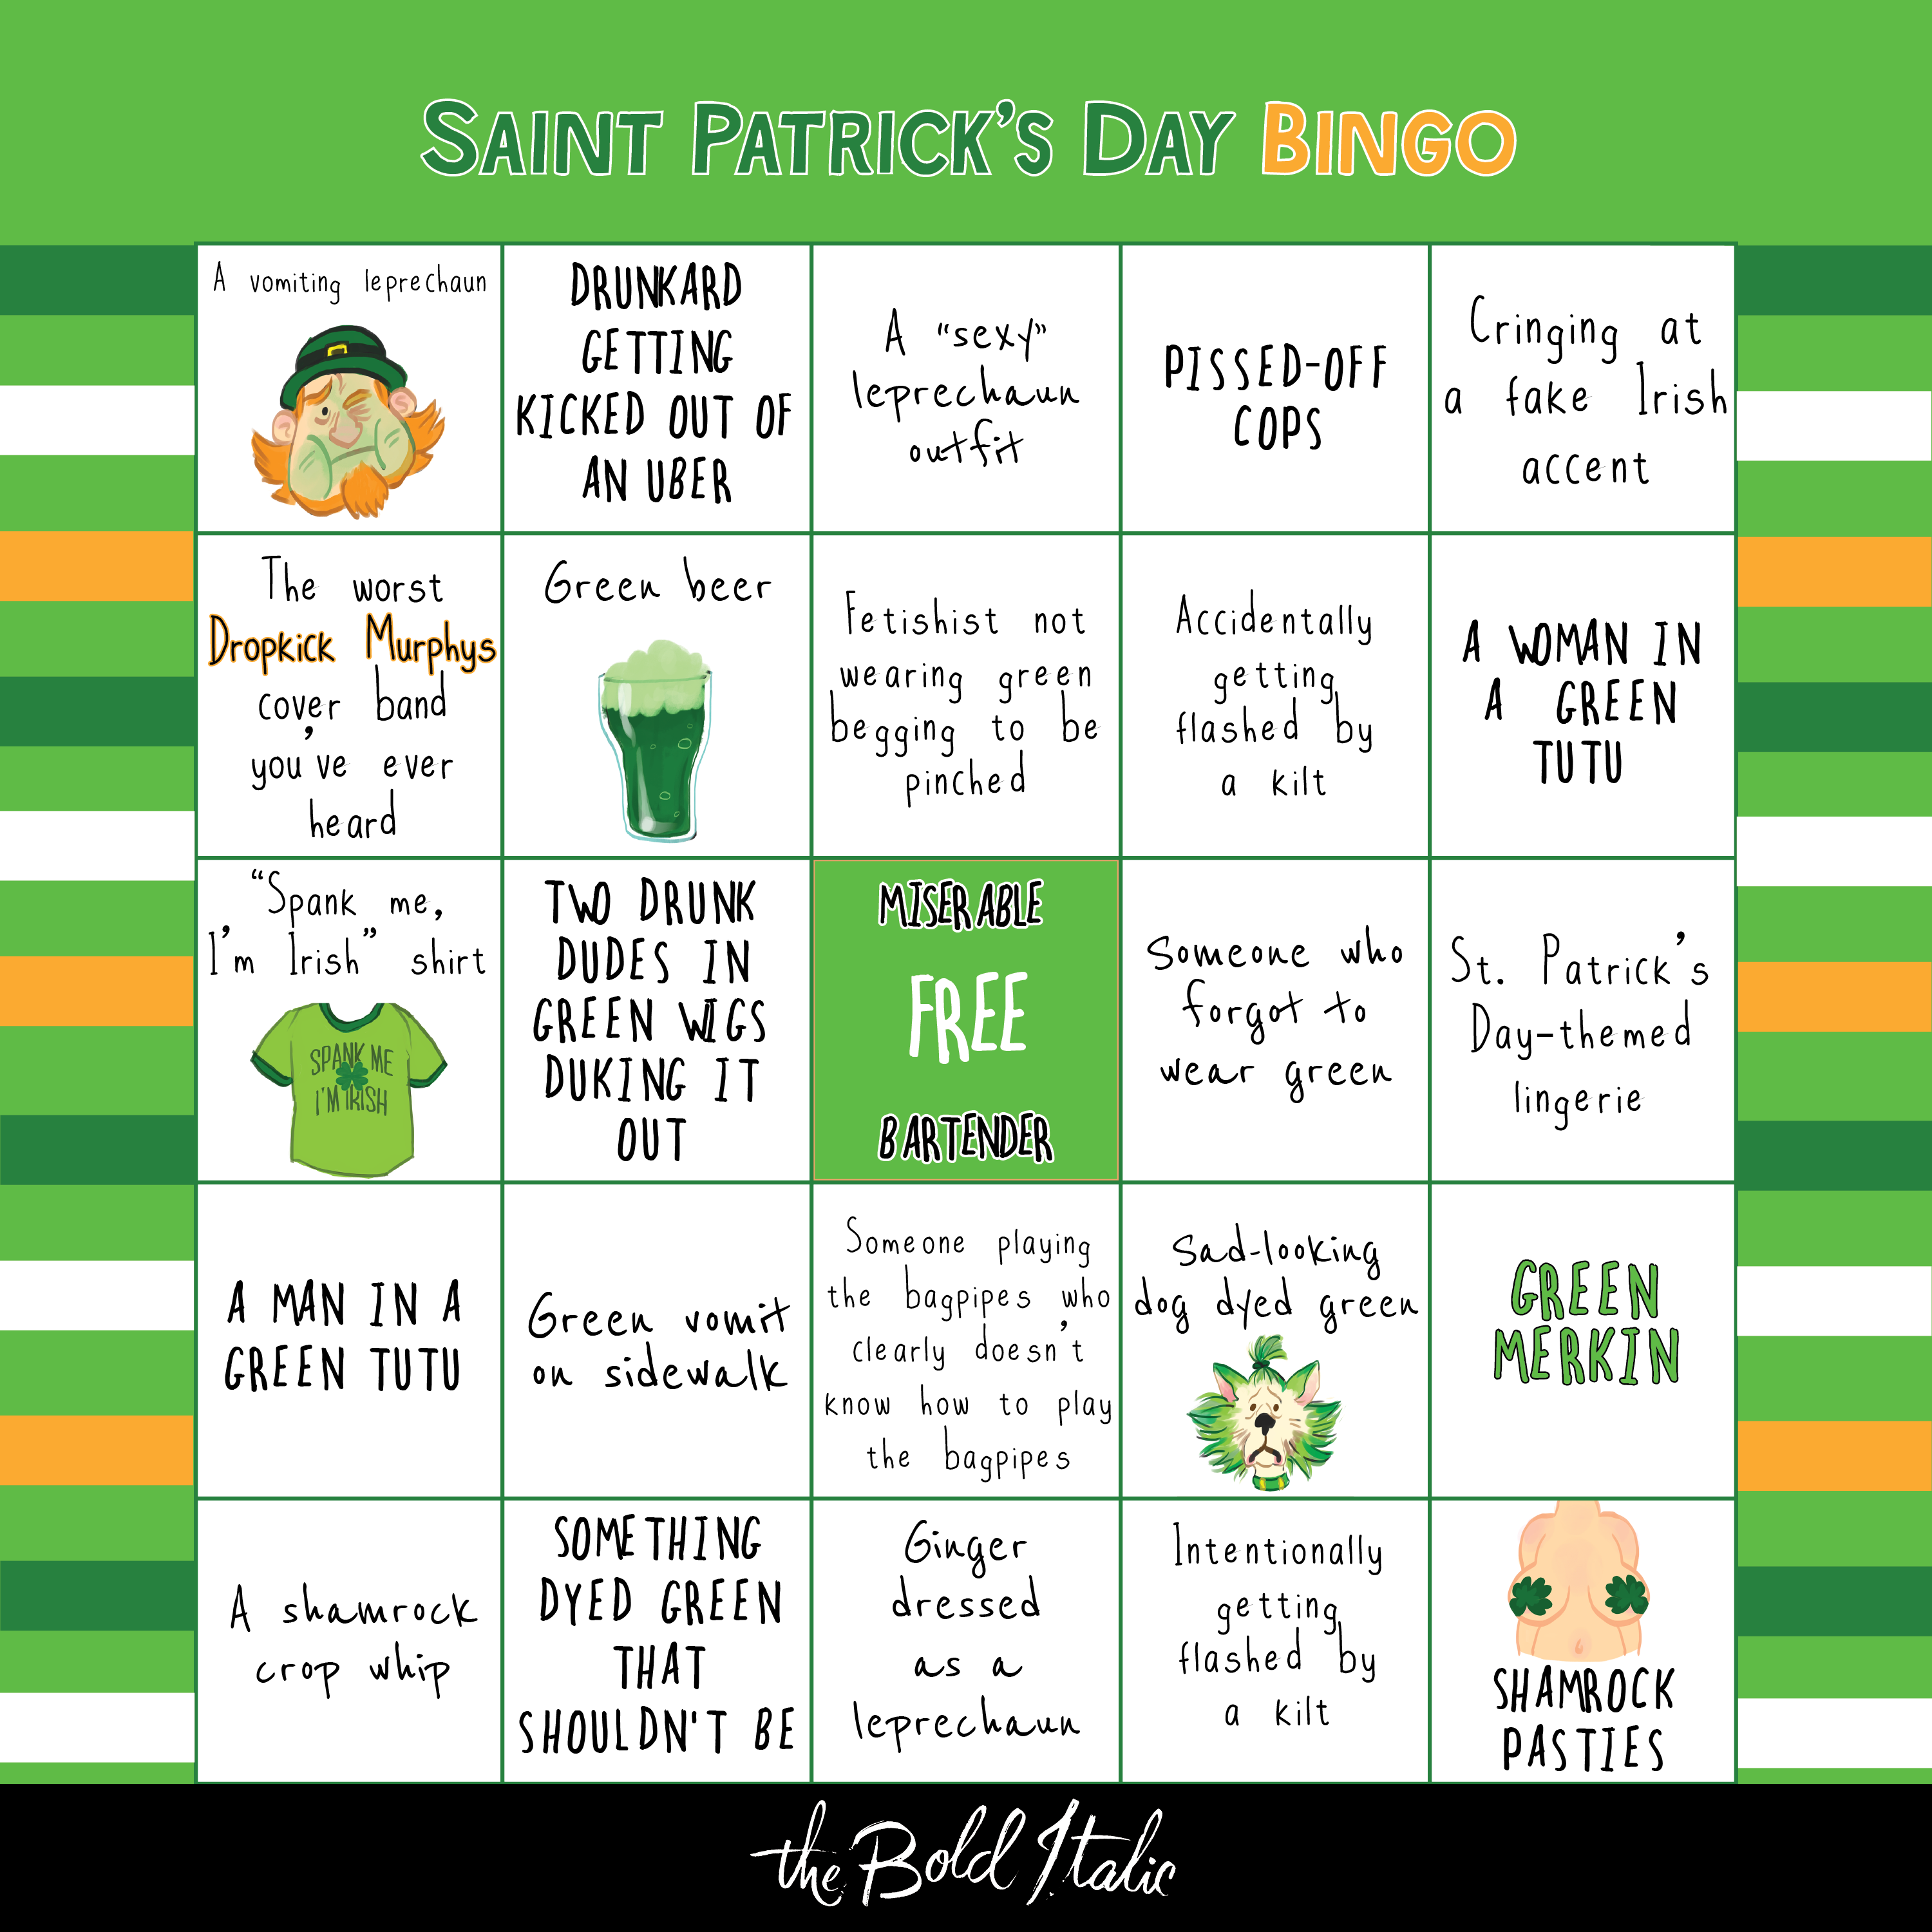 St. Patrick's Day Bingo Night Flyer